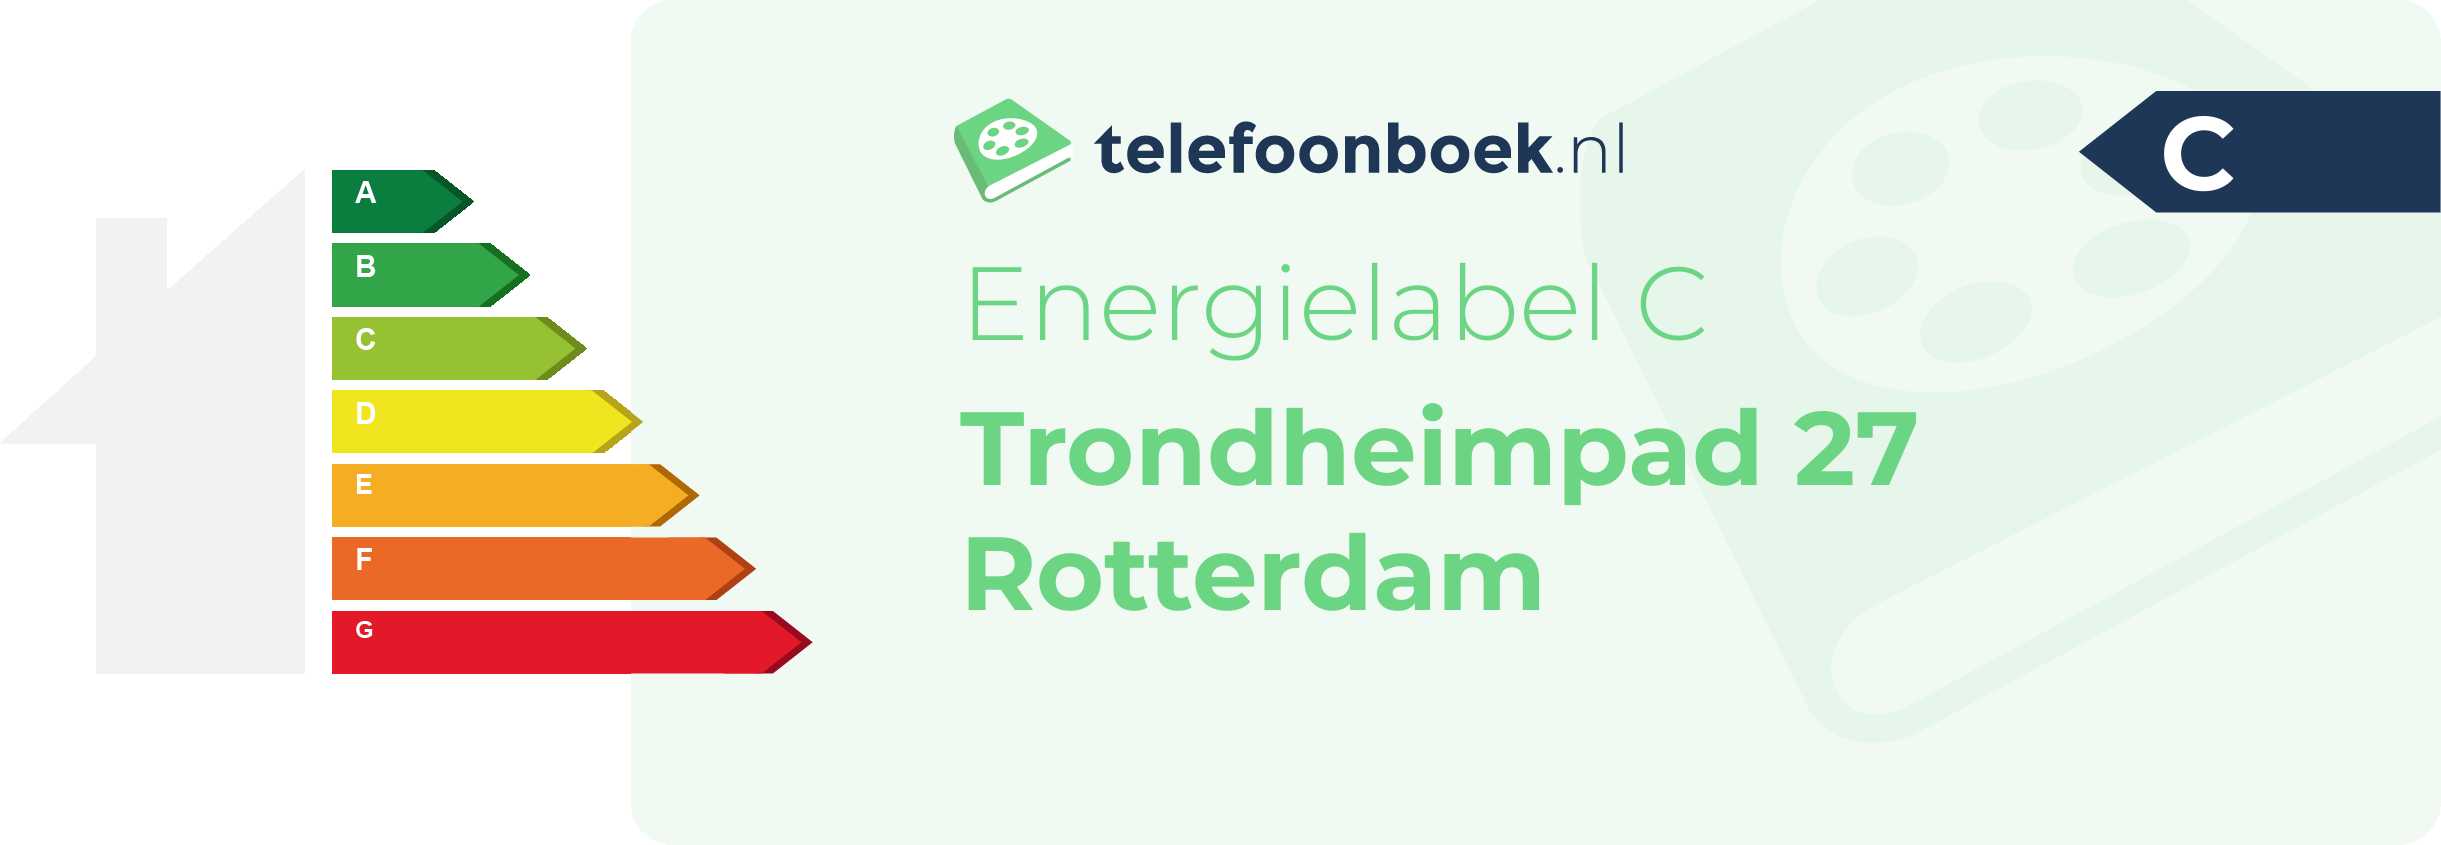 Energielabel Trondheimpad 27 Rotterdam